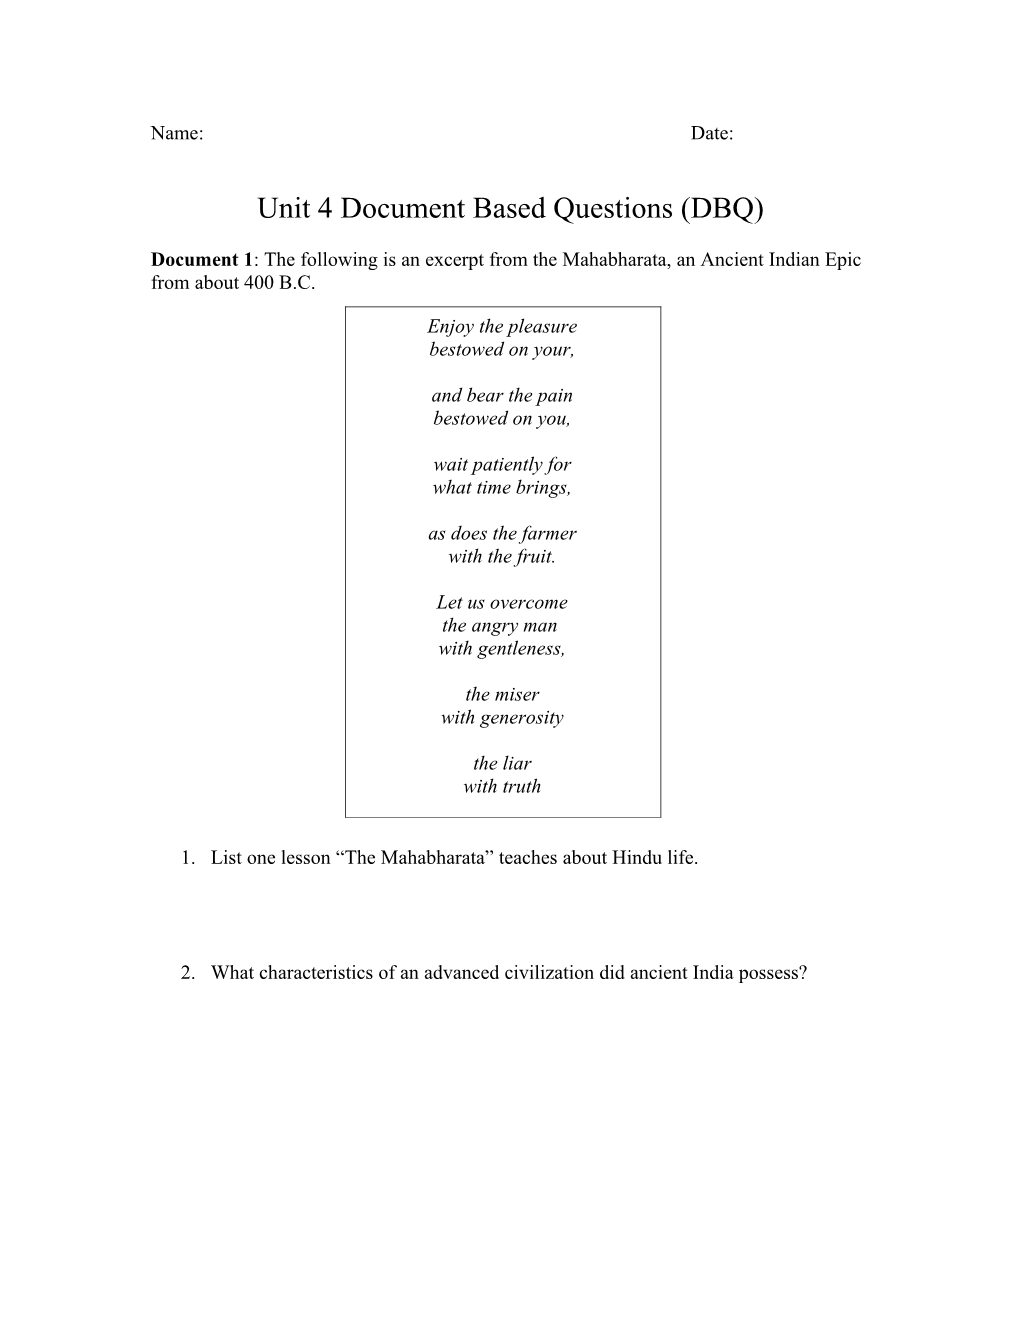 Unit 4 Document Based Questions (DBQ)